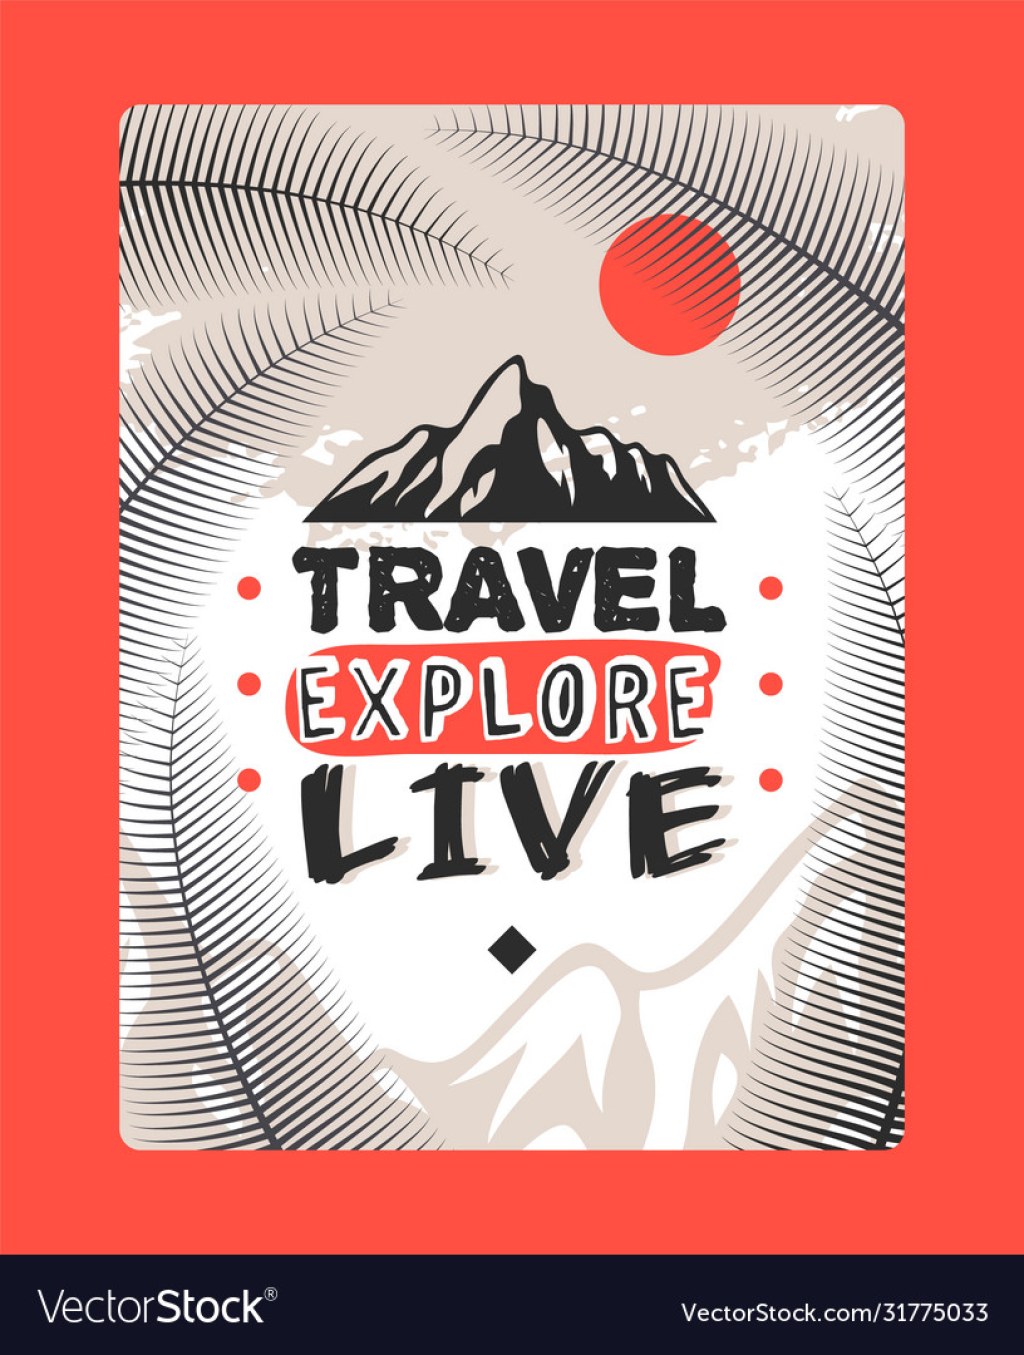 explore travel mountain - Travel explore live logo mountains Royalty Free Vector Image